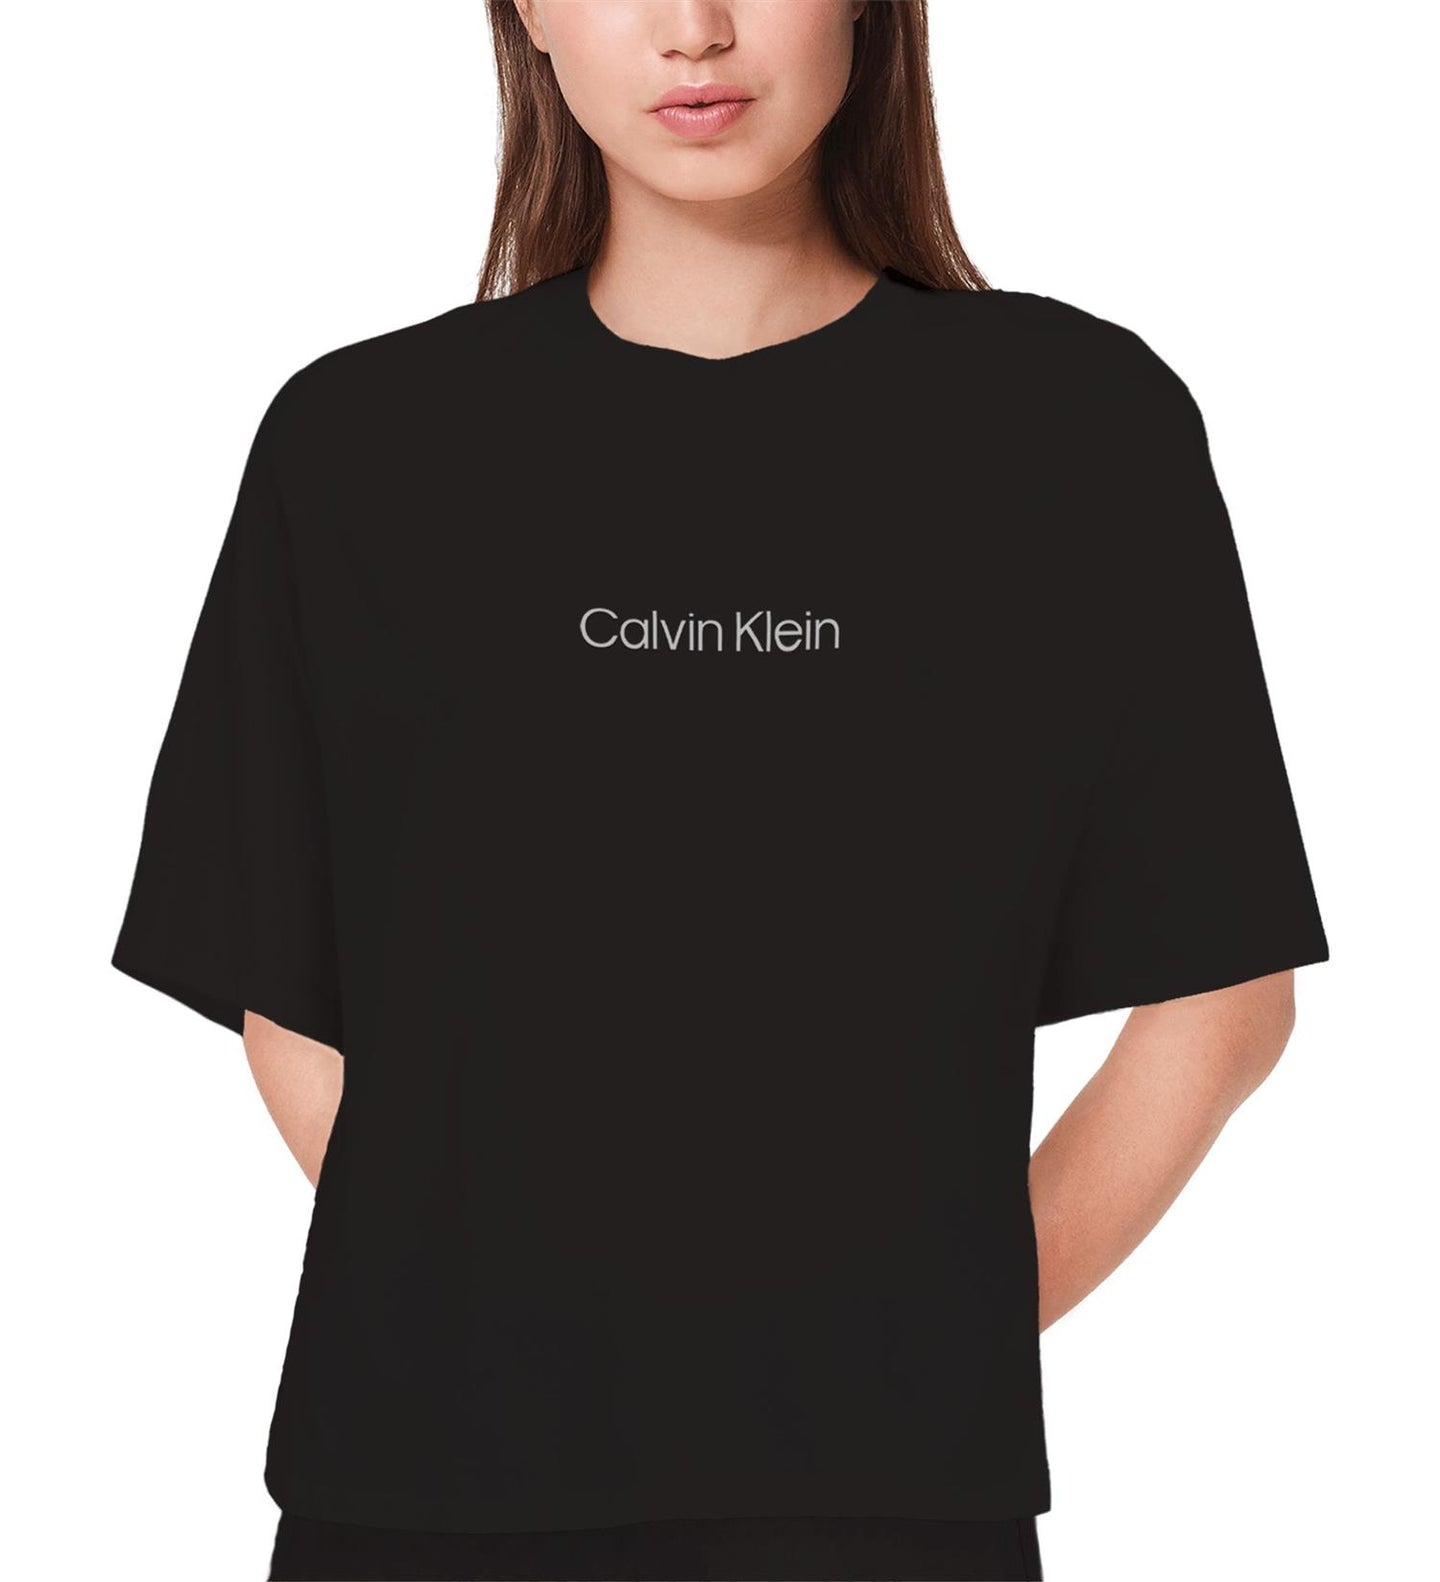 CK T-shirt Logo Crew neck